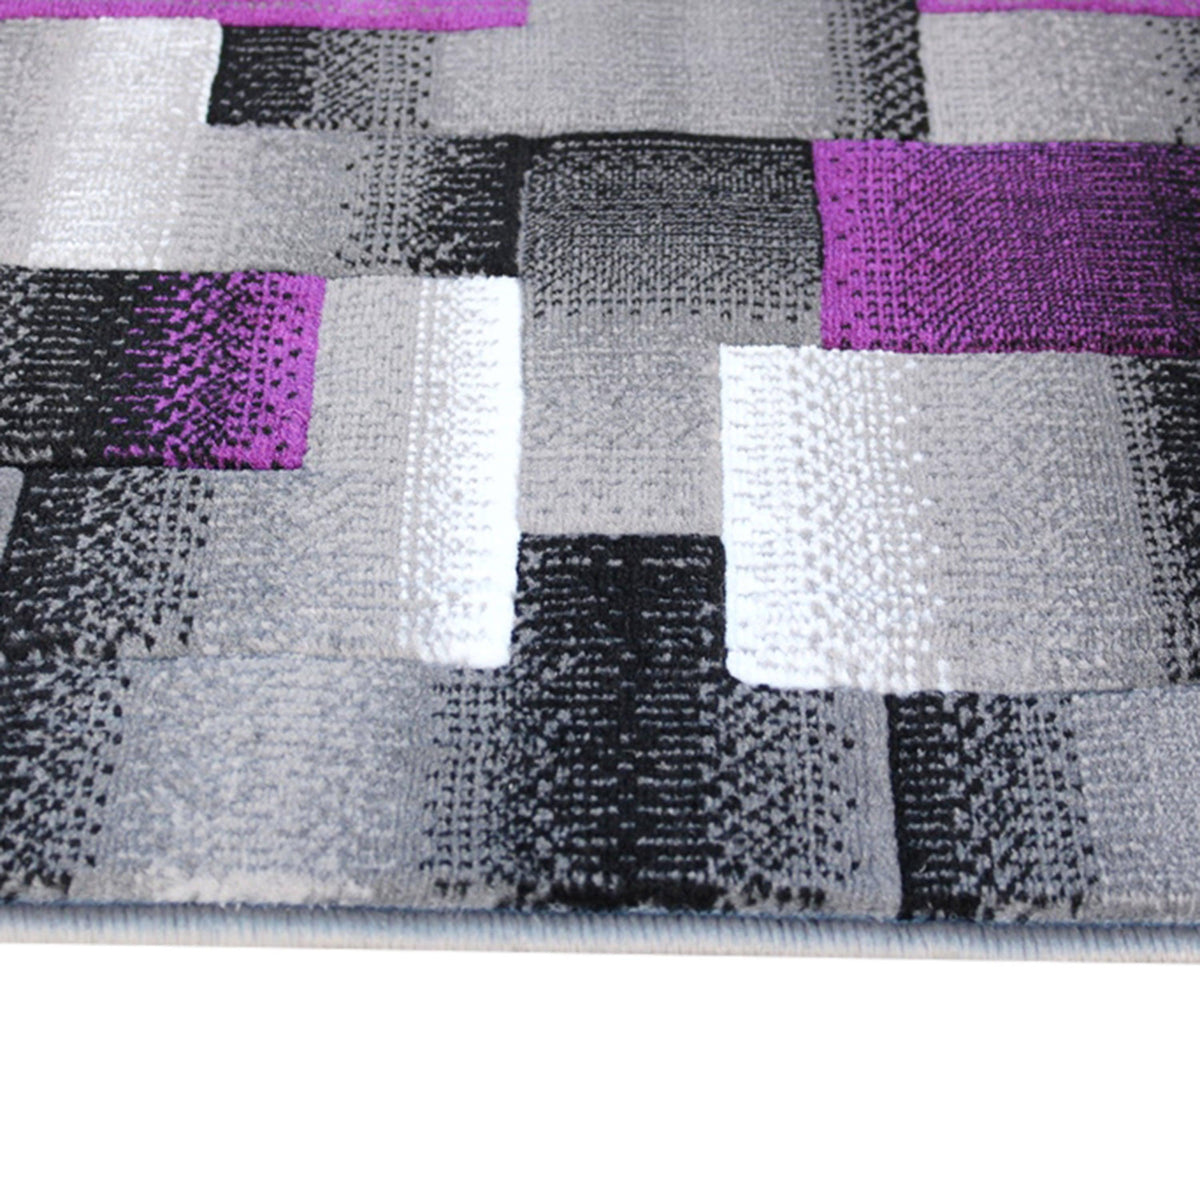 Purple,2' x 7' |#| Modern Geometric Style Color Blocked Indoor Area Rug - Purple - 2' x 7'